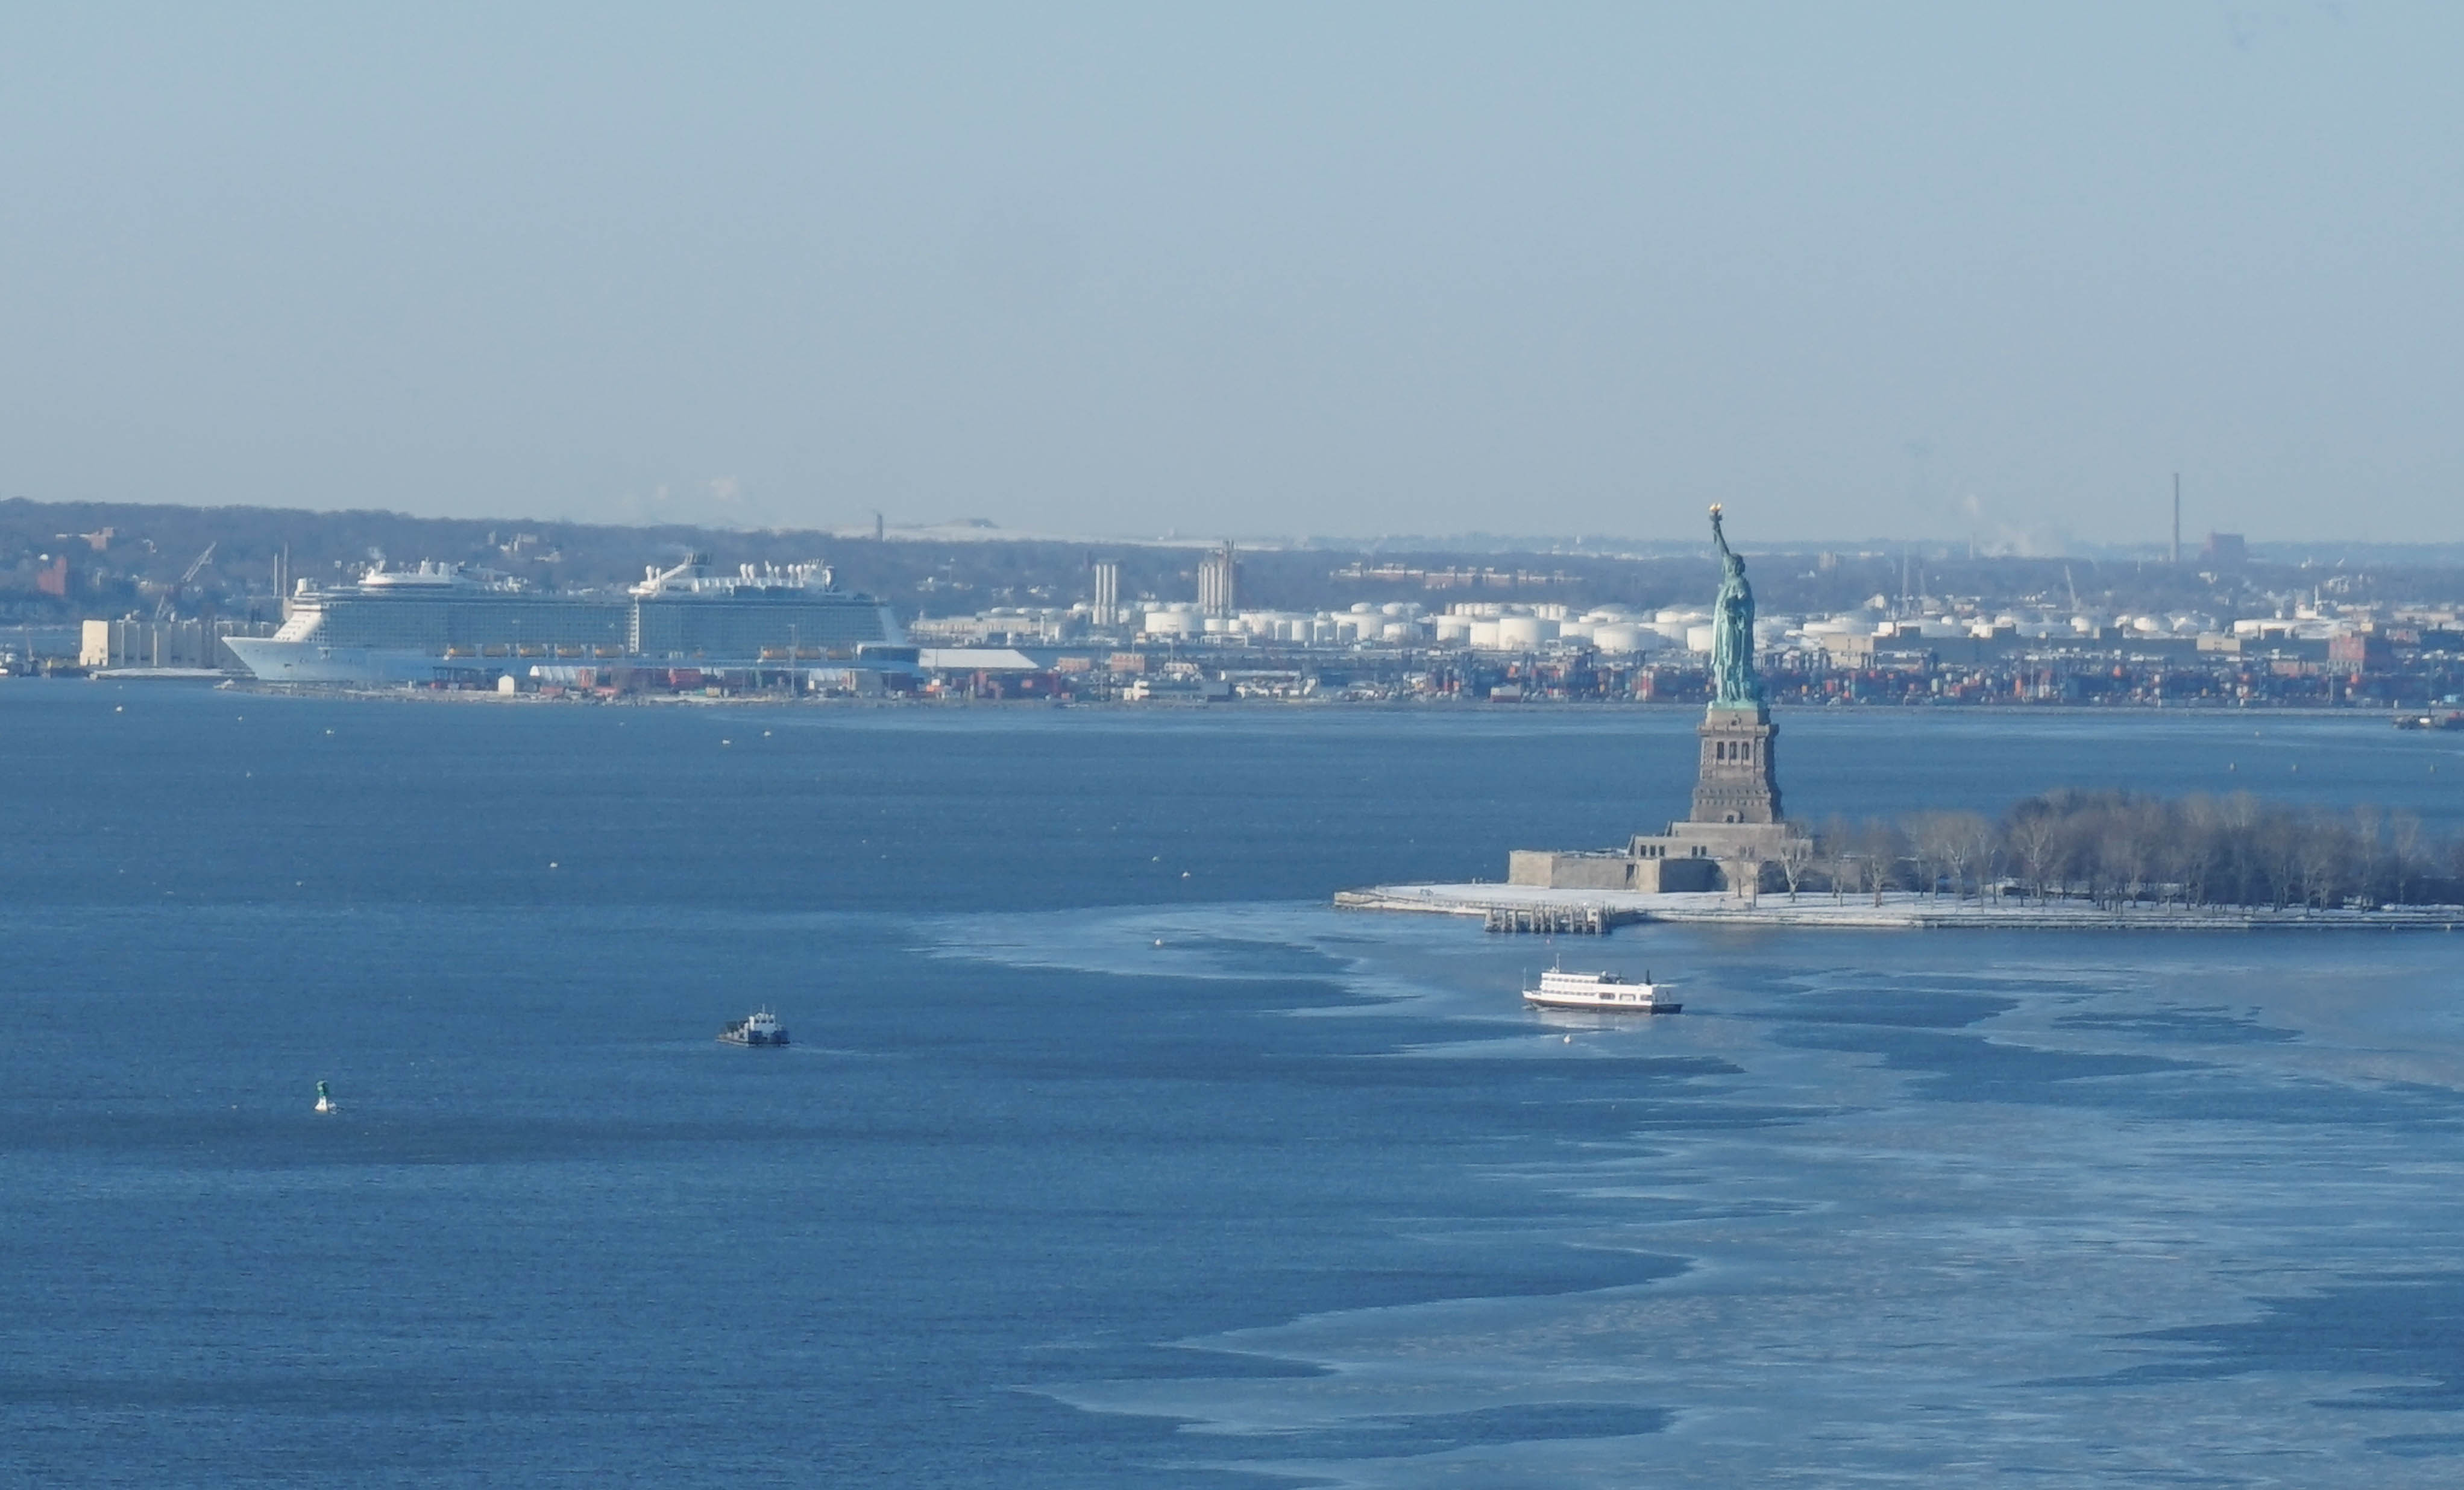 Cruise ship statue liberty ice 2-20-2015